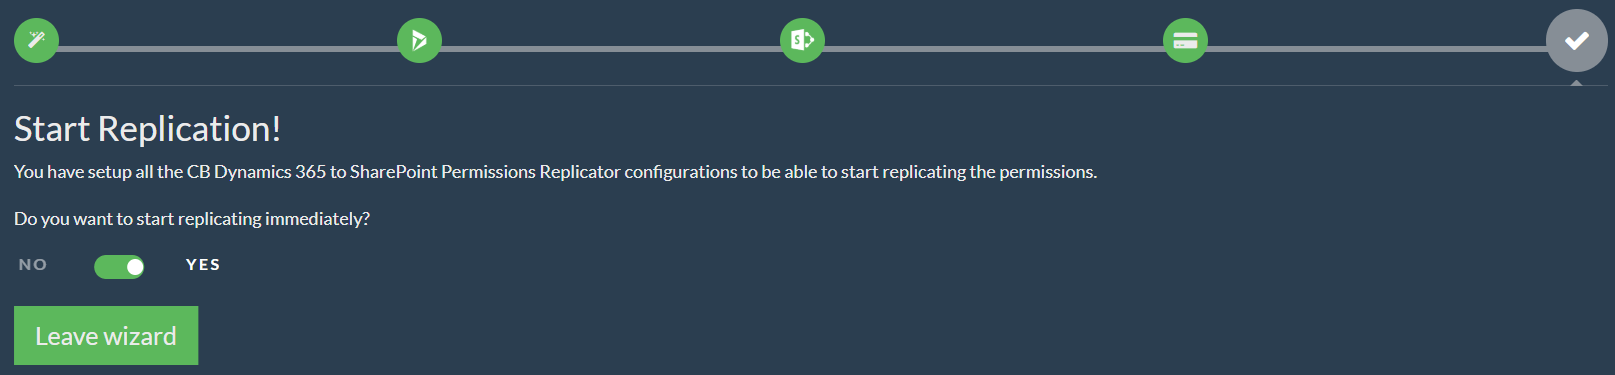 Configuration Wizard – Starting Replication